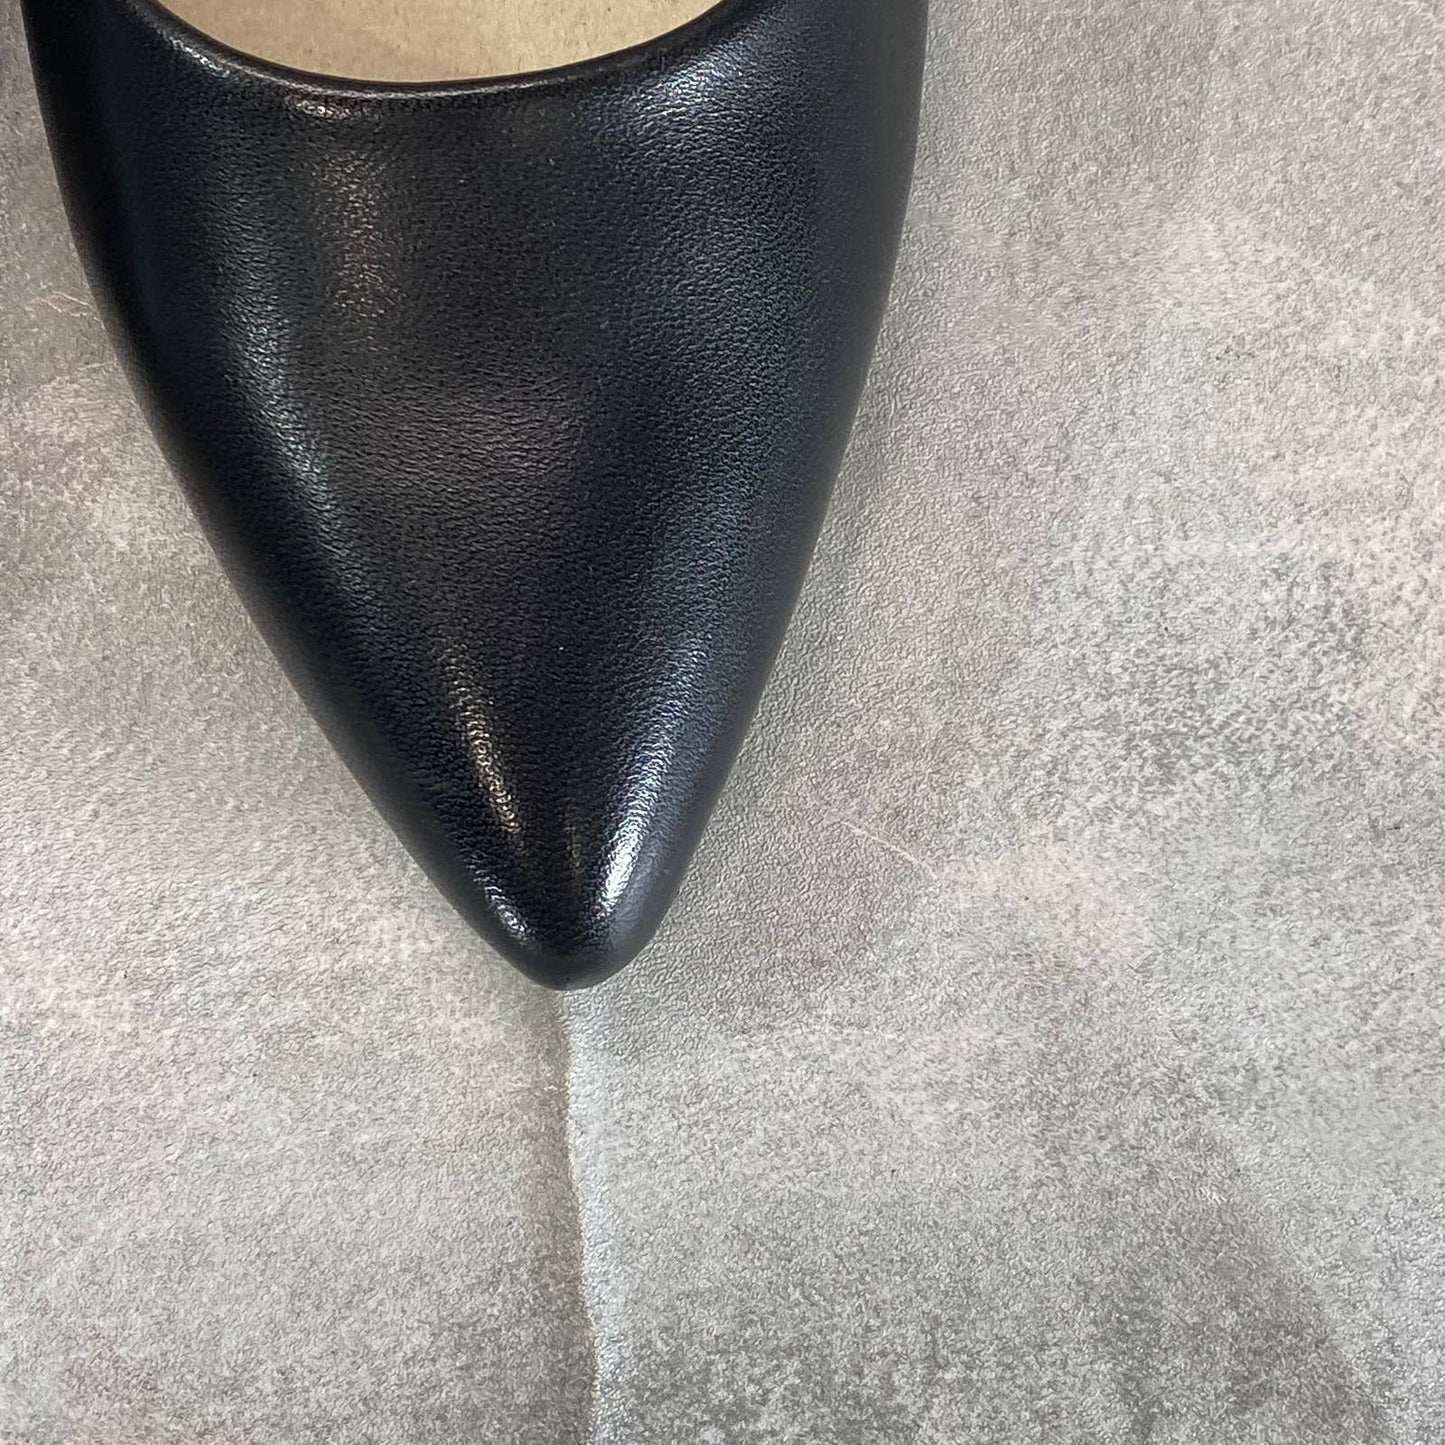 NINE WEST Women's Black Leather Flax Pointed-Toe Stiletto Dress Pumps SZ 9.5